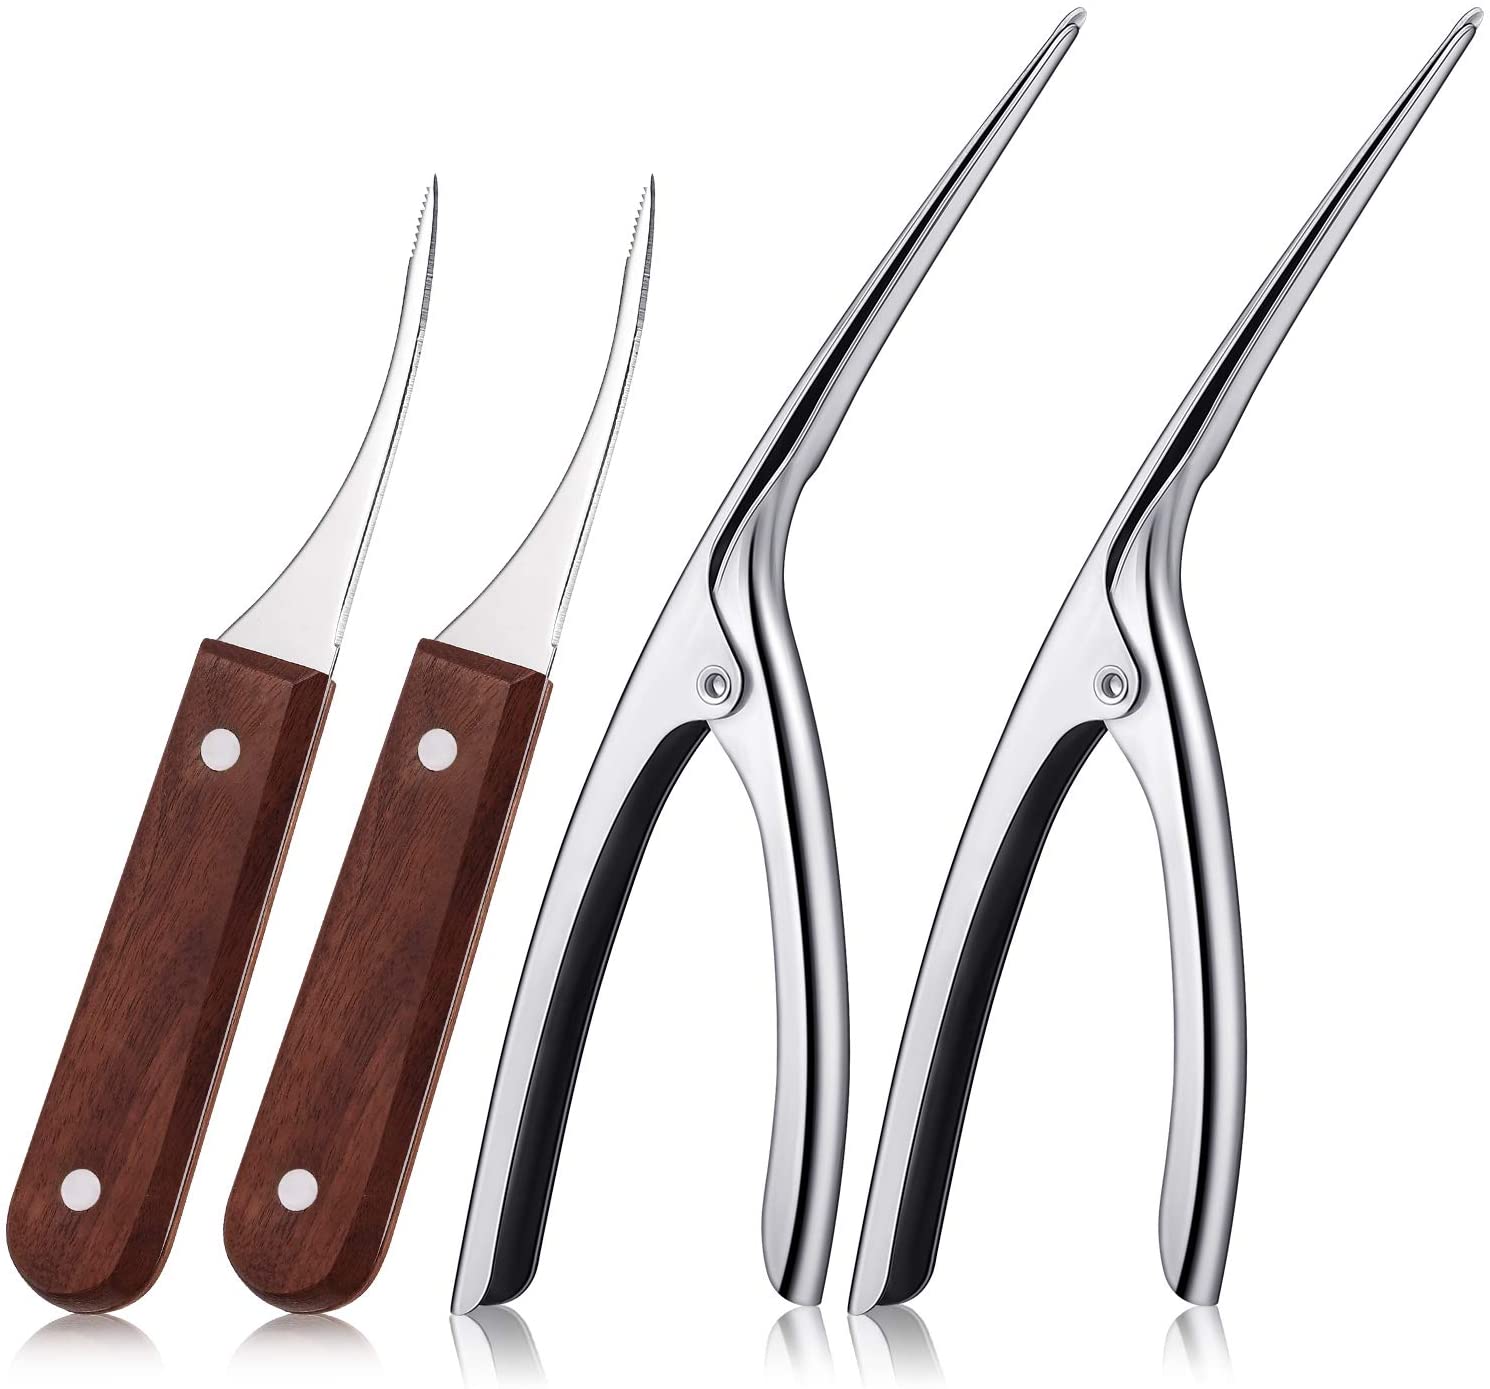 Cutco knives reviews 